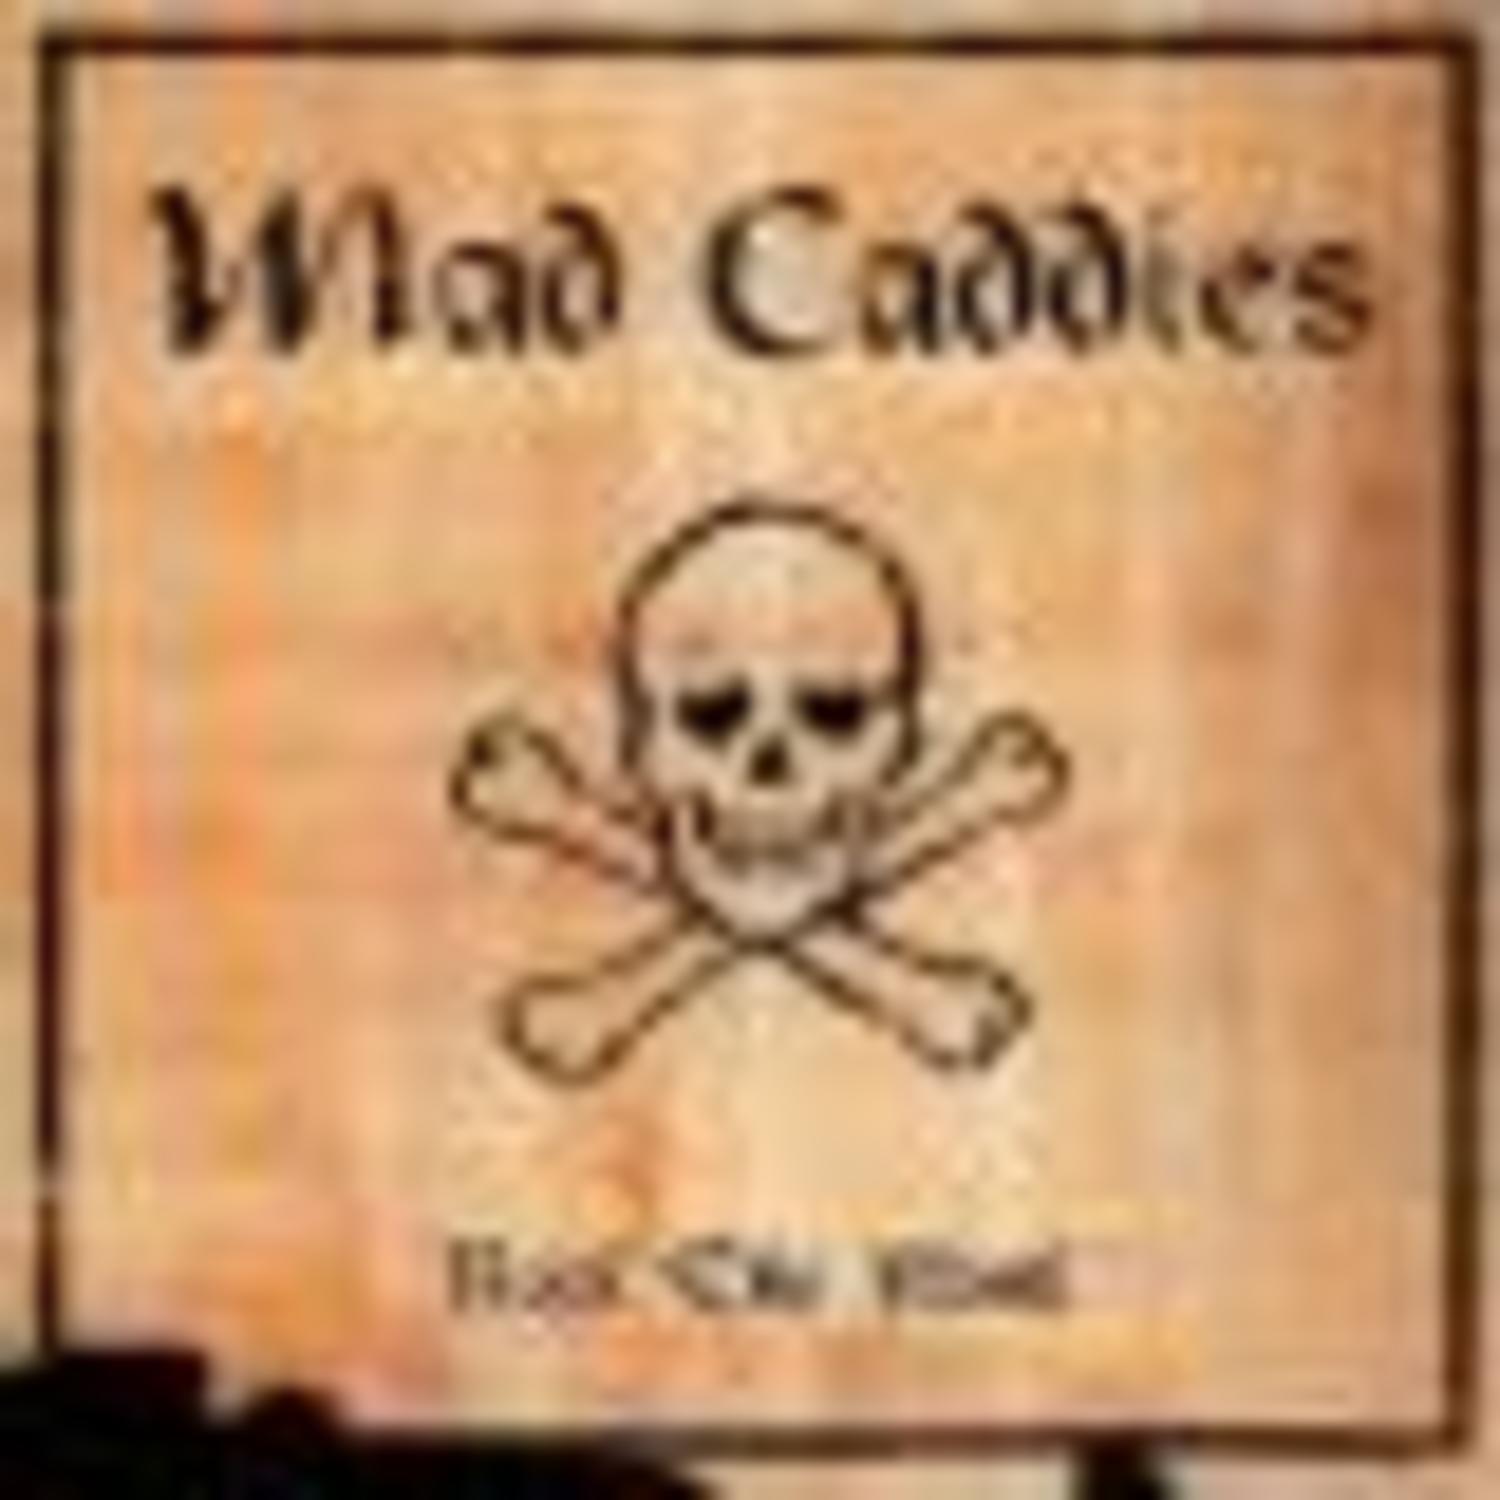 Mad Caddies - ROCK THE PLANK 